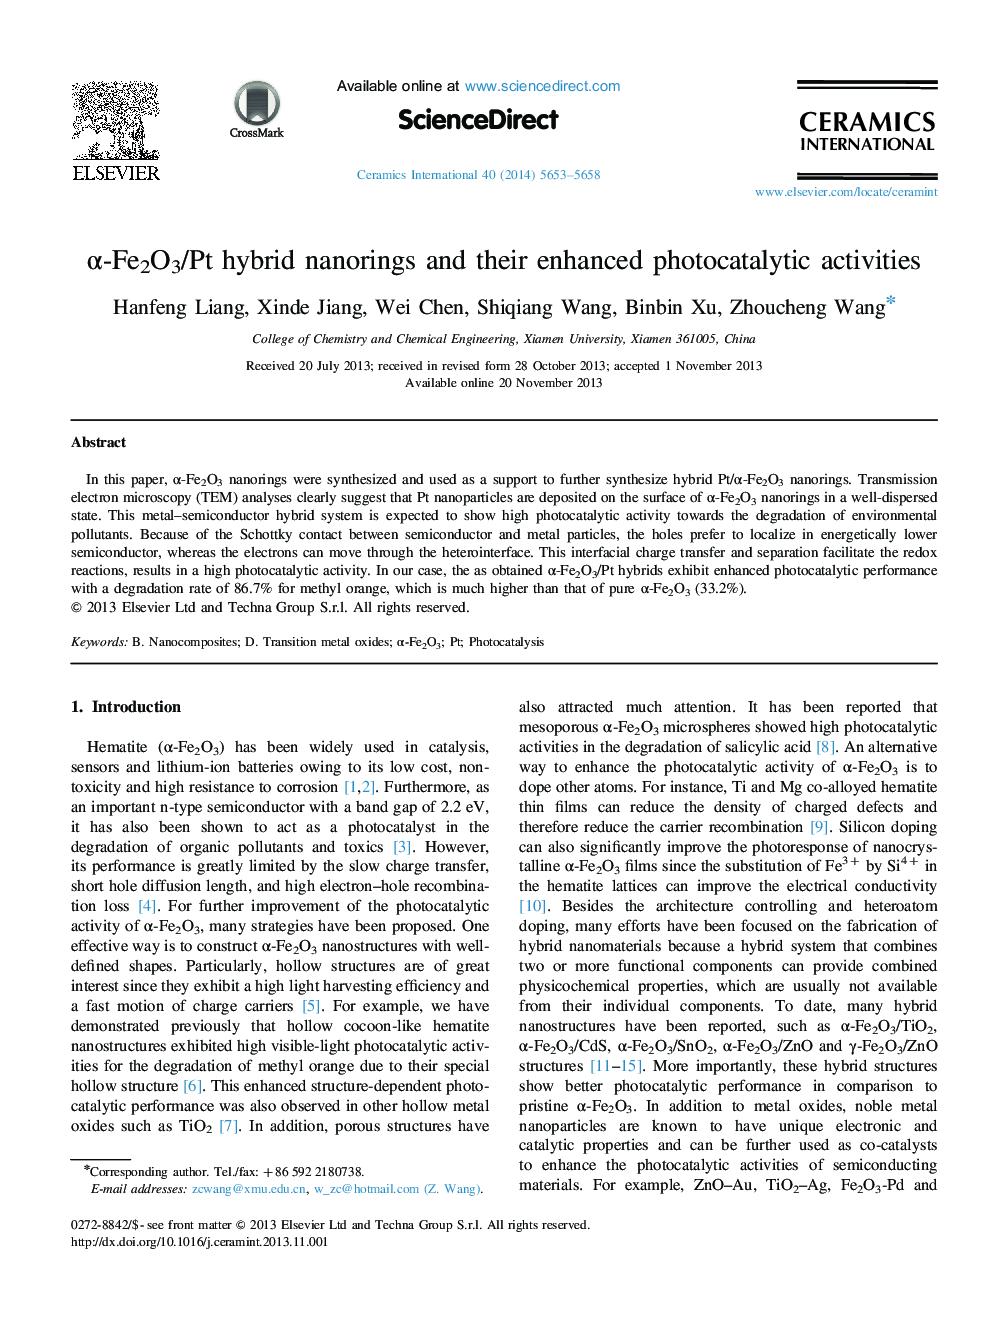 Î±-Fe2O3/Pt hybrid nanorings and their enhanced photocatalytic activities